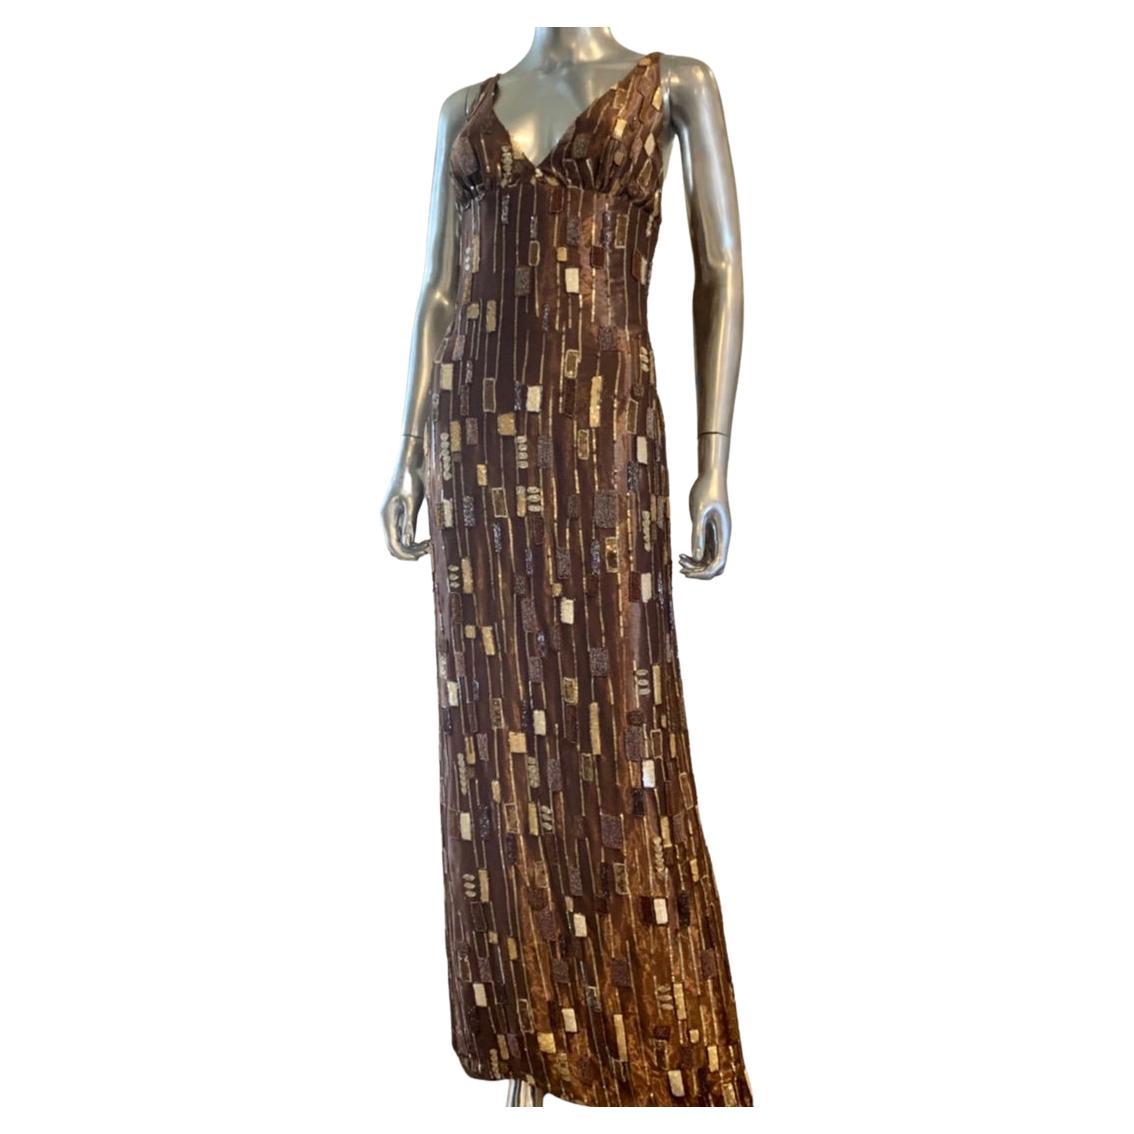 Peter Langner Italian Beaded Dress Titled "The Kiss" After Gustav Klimt Size 10 For Sale